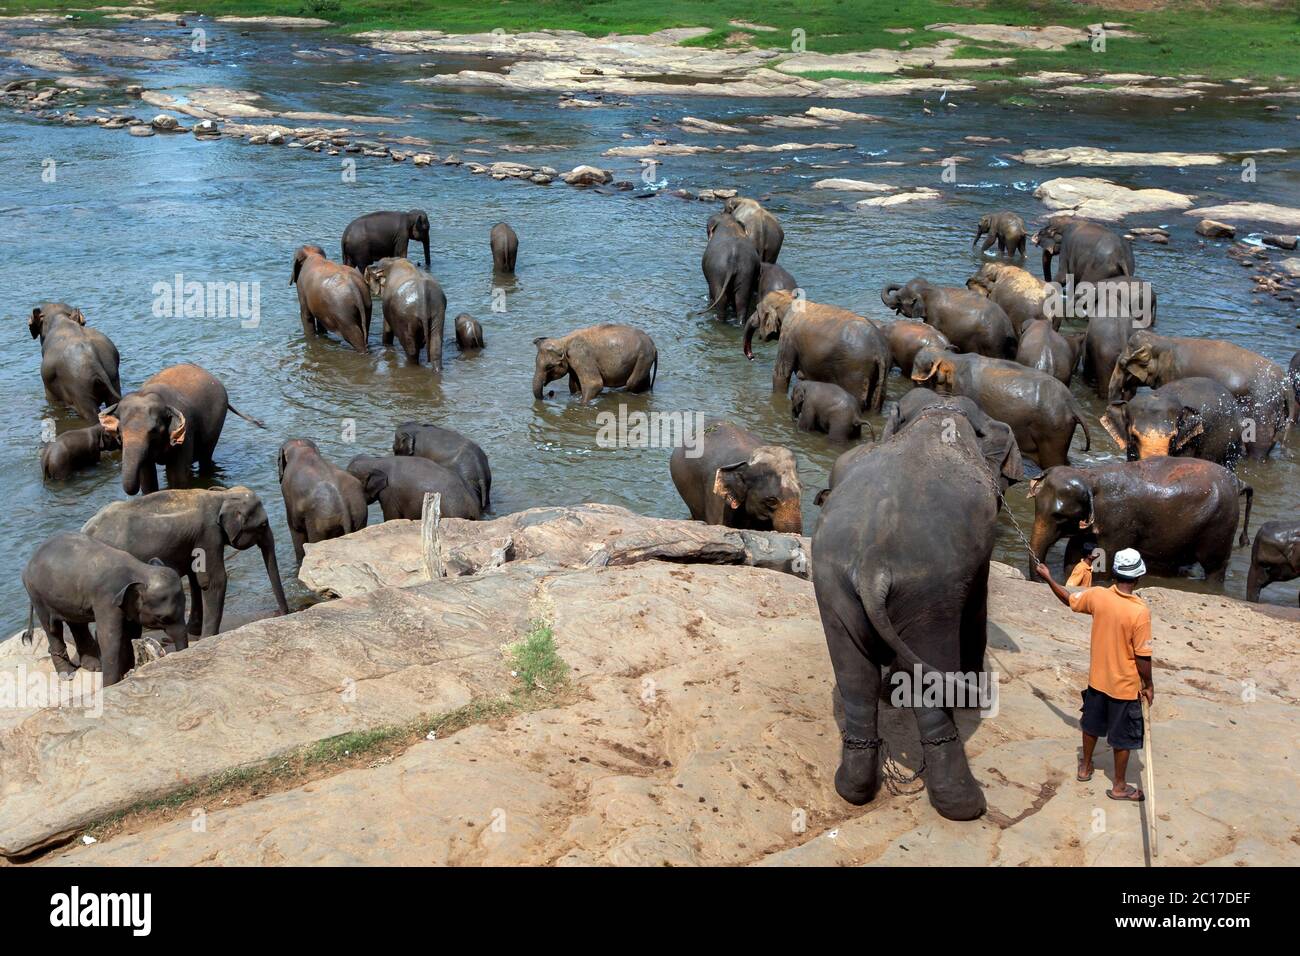 Elephants from the Pinnawala Elephant Orphanage bathe in the Maha Oya River. Twice daily the elephants bathe in the river. Stock Photo